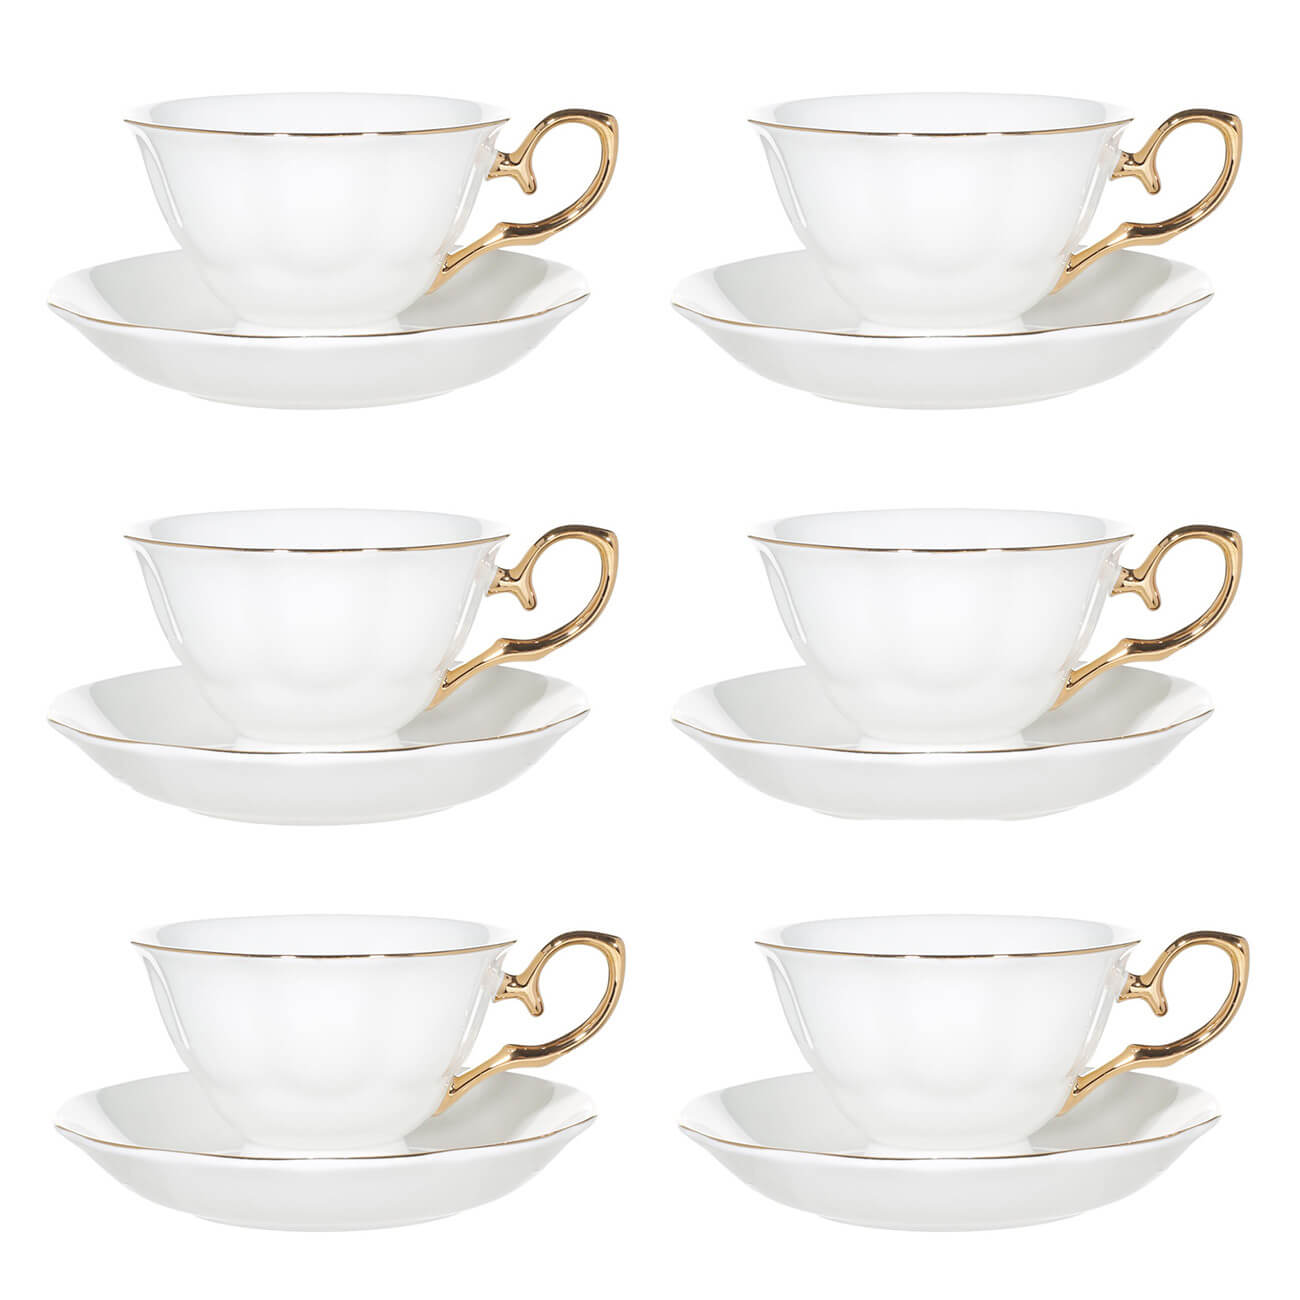 Пара чайная, 6 перс, 12 пр, 180 мл, фарфор F, бело-золотистая, Premium Gold чайная пара nouvelle